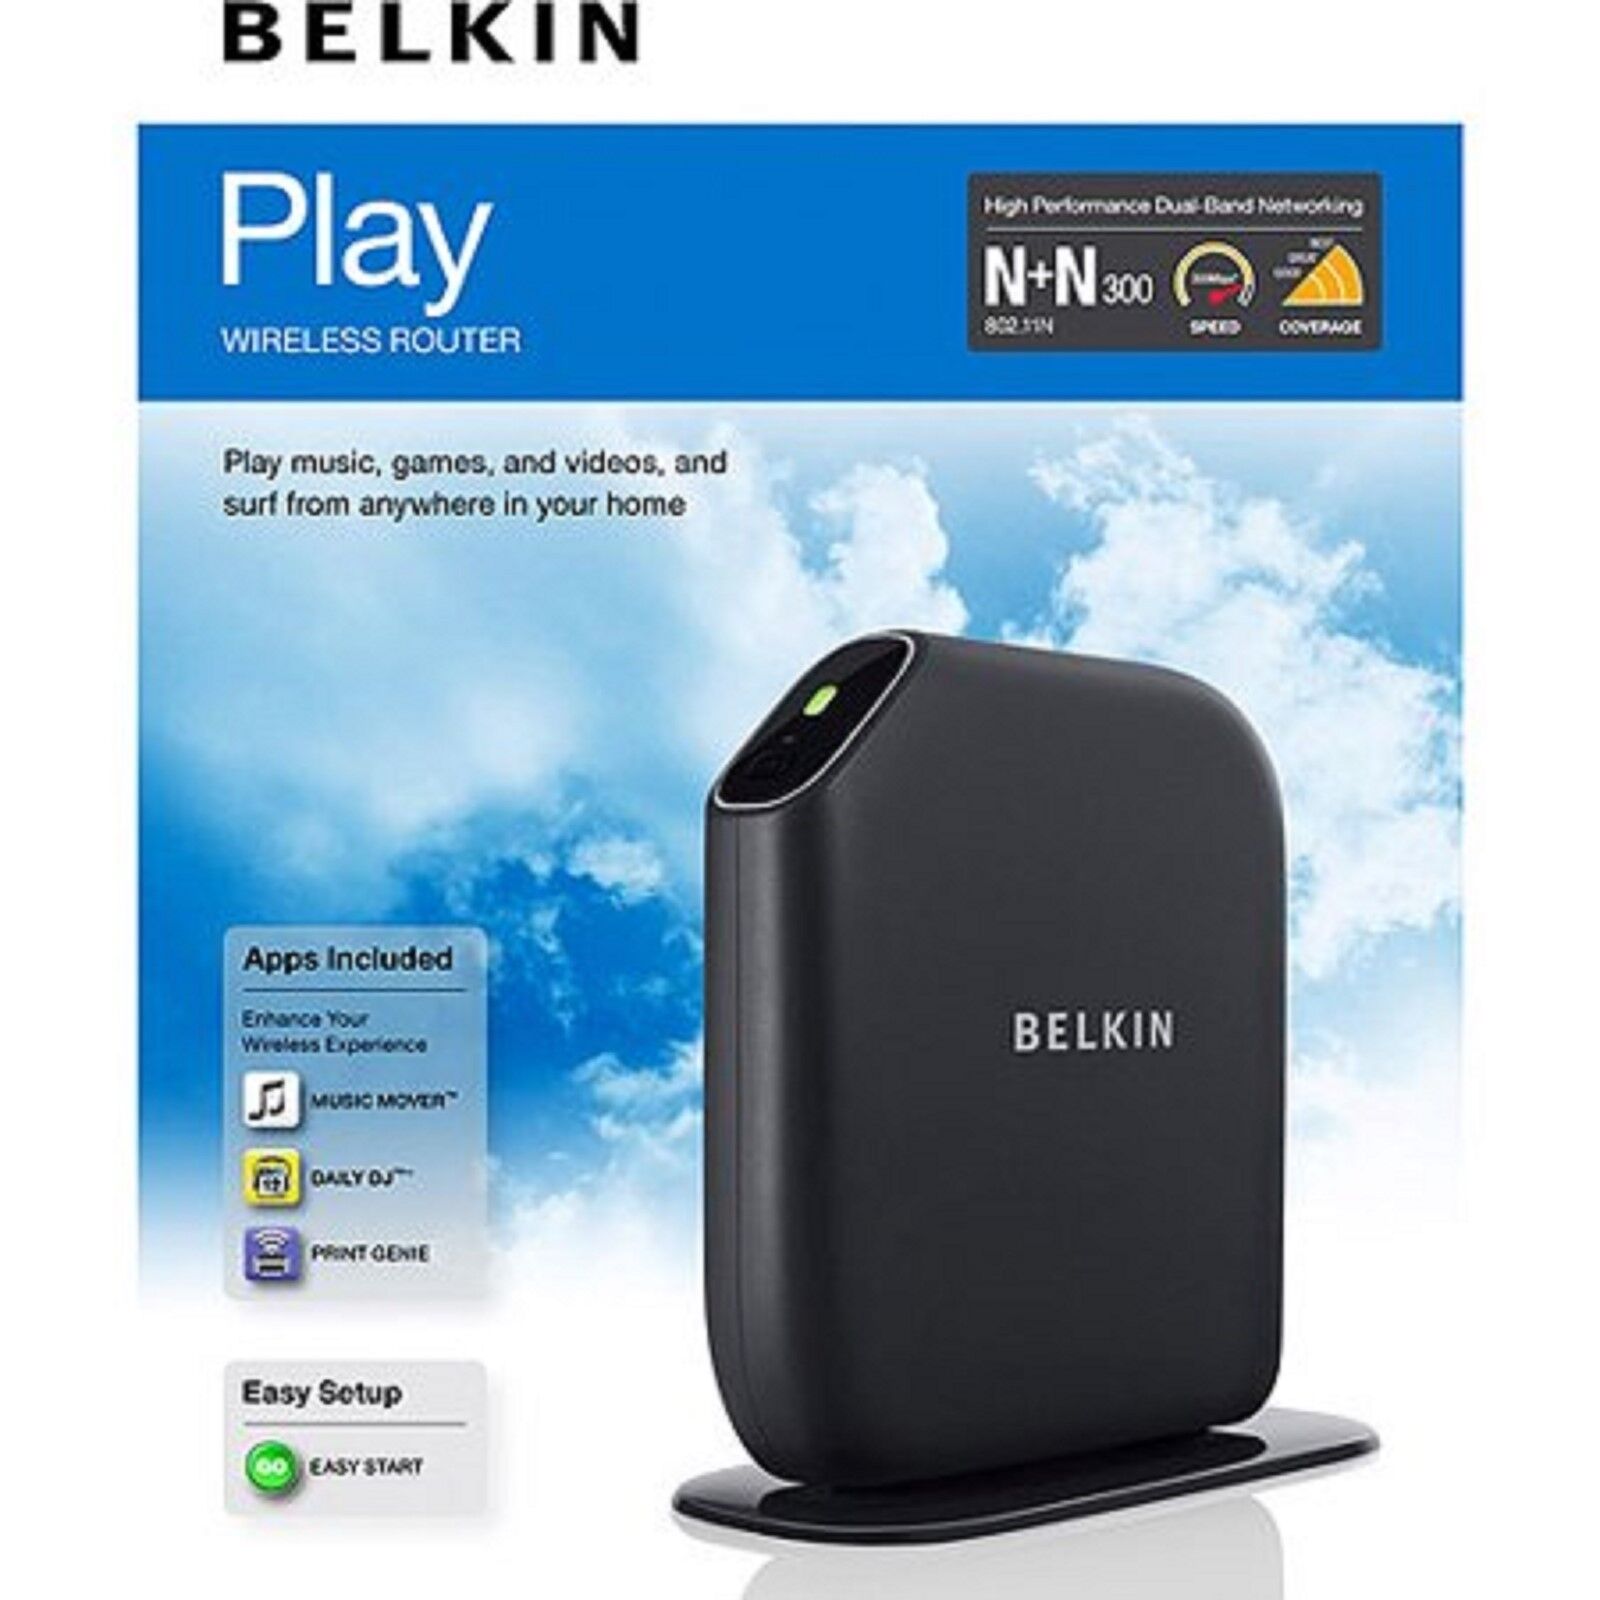 NewBELKIN Play Max Wireless RouterN+N300 High-PerformanceDual-Bd Netwk 